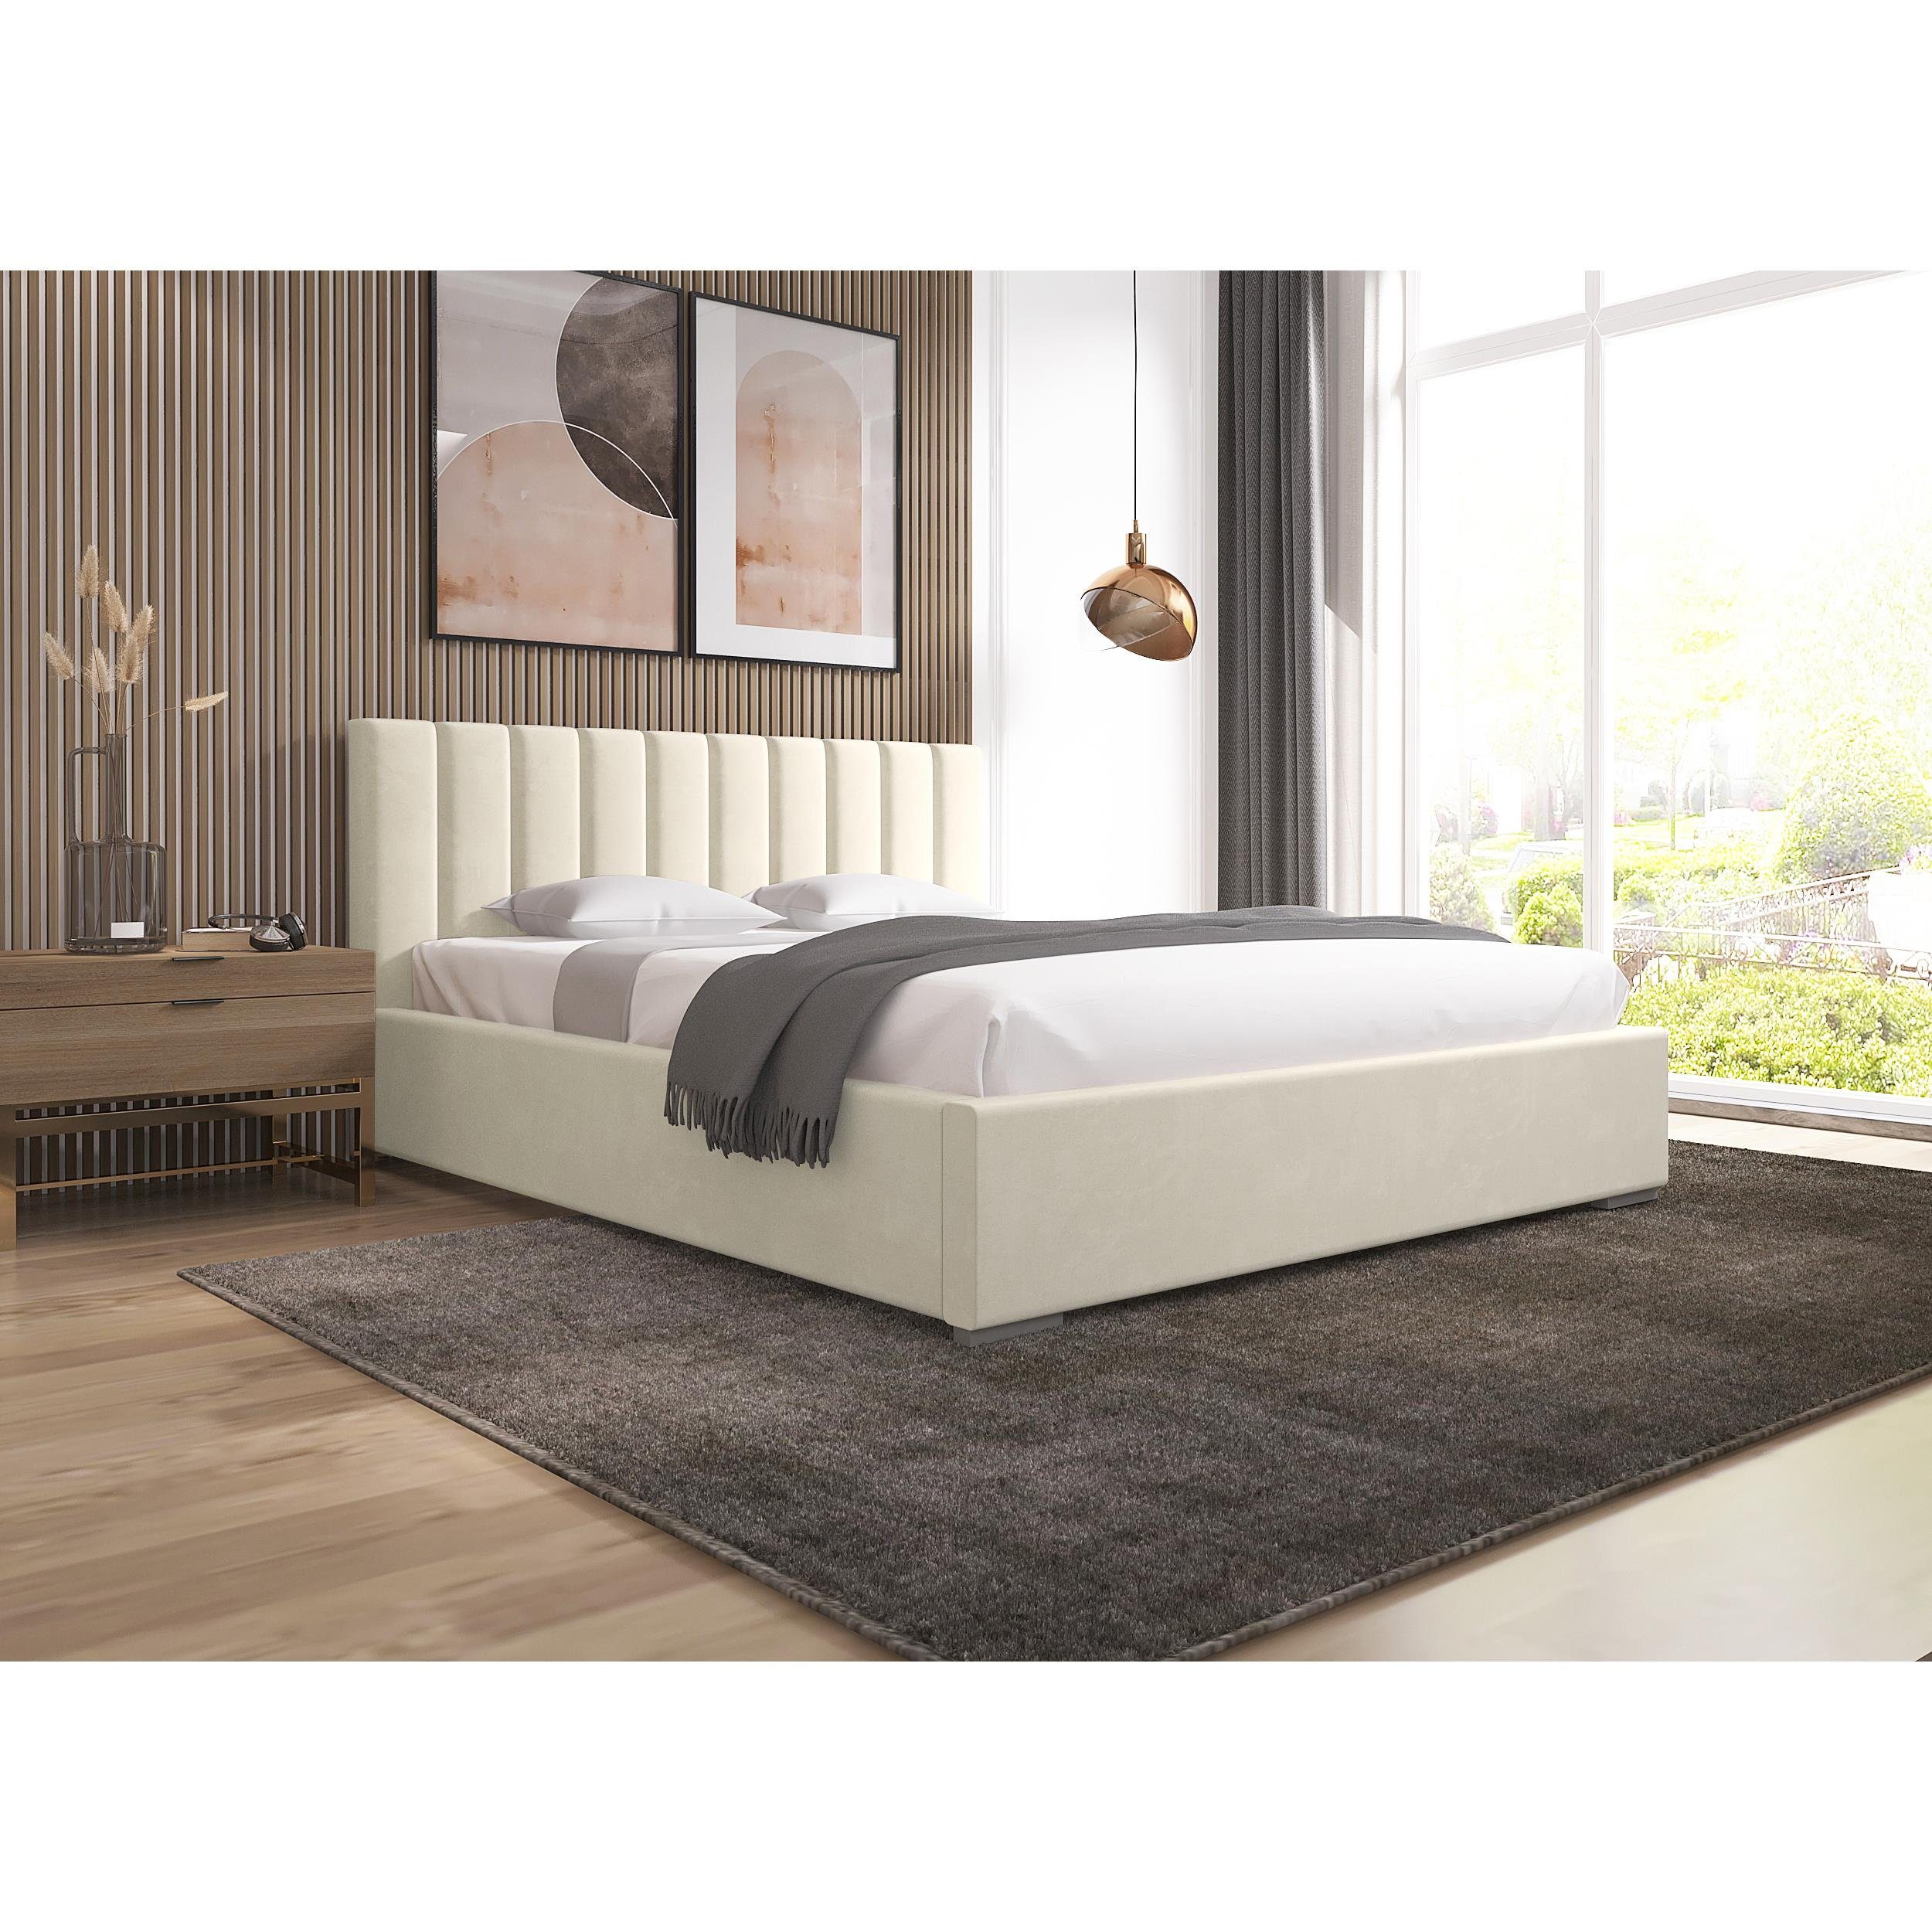 Beautysofa Polsterbett Adeline (stilvoll Bett mit Velvet-Bezug, Beige Polsterbett 120 x 200 cm), mit Bettkasten, mit Holzgestell Beige (mono 231)